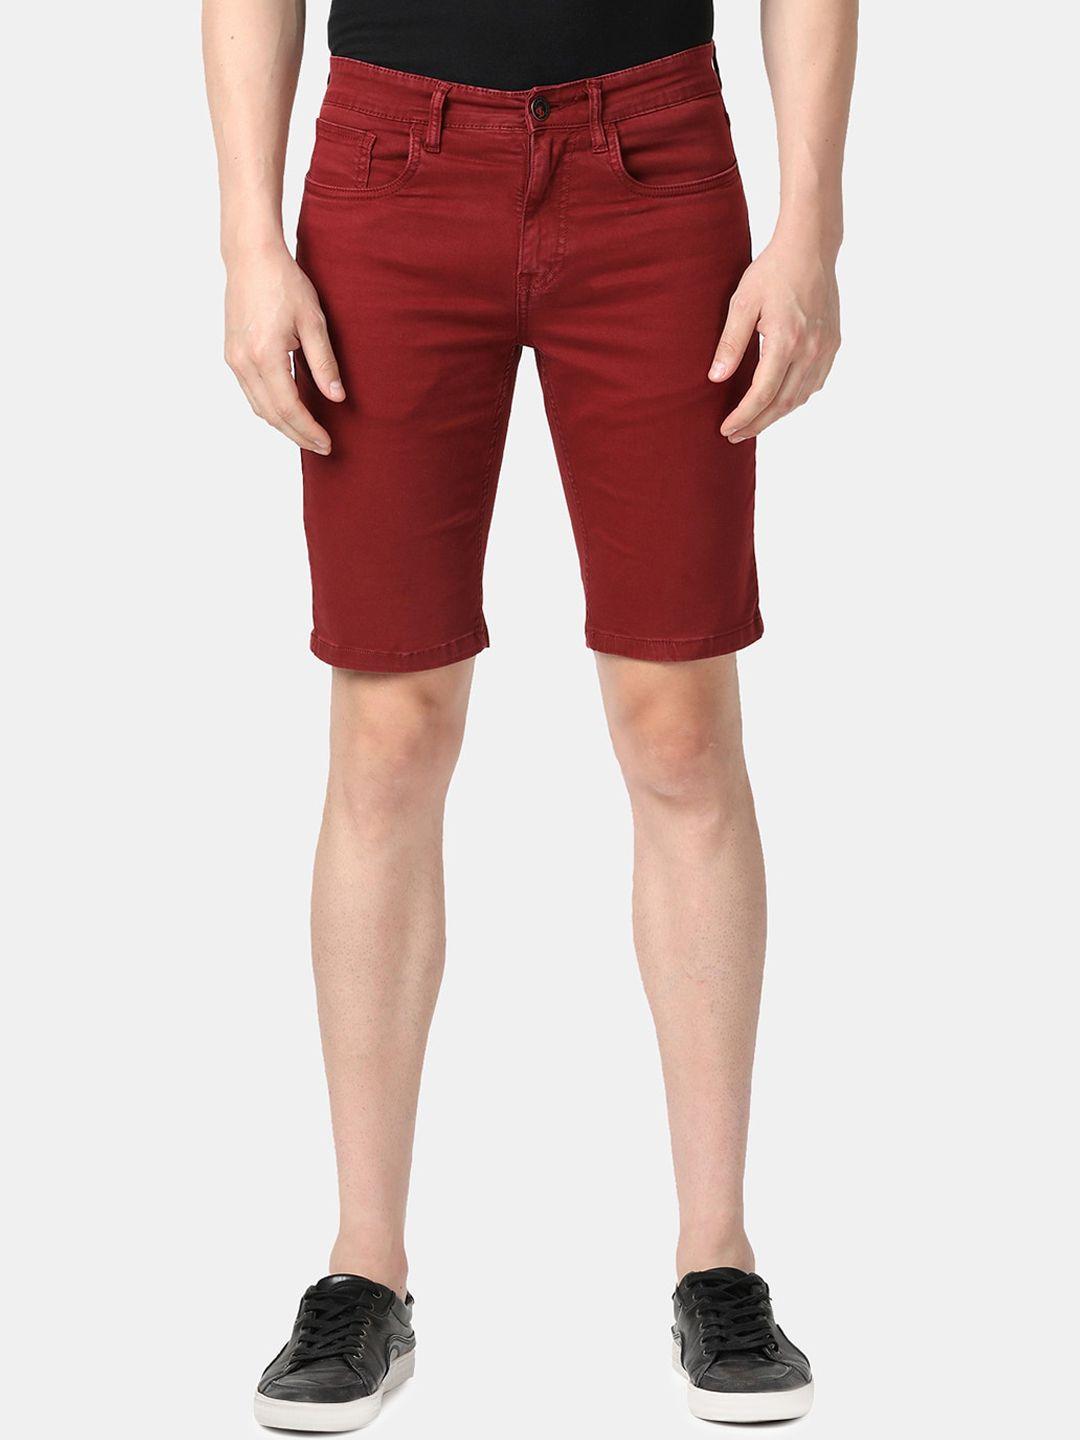 llak-jeans-men-red-slim-fit-denim-shorts